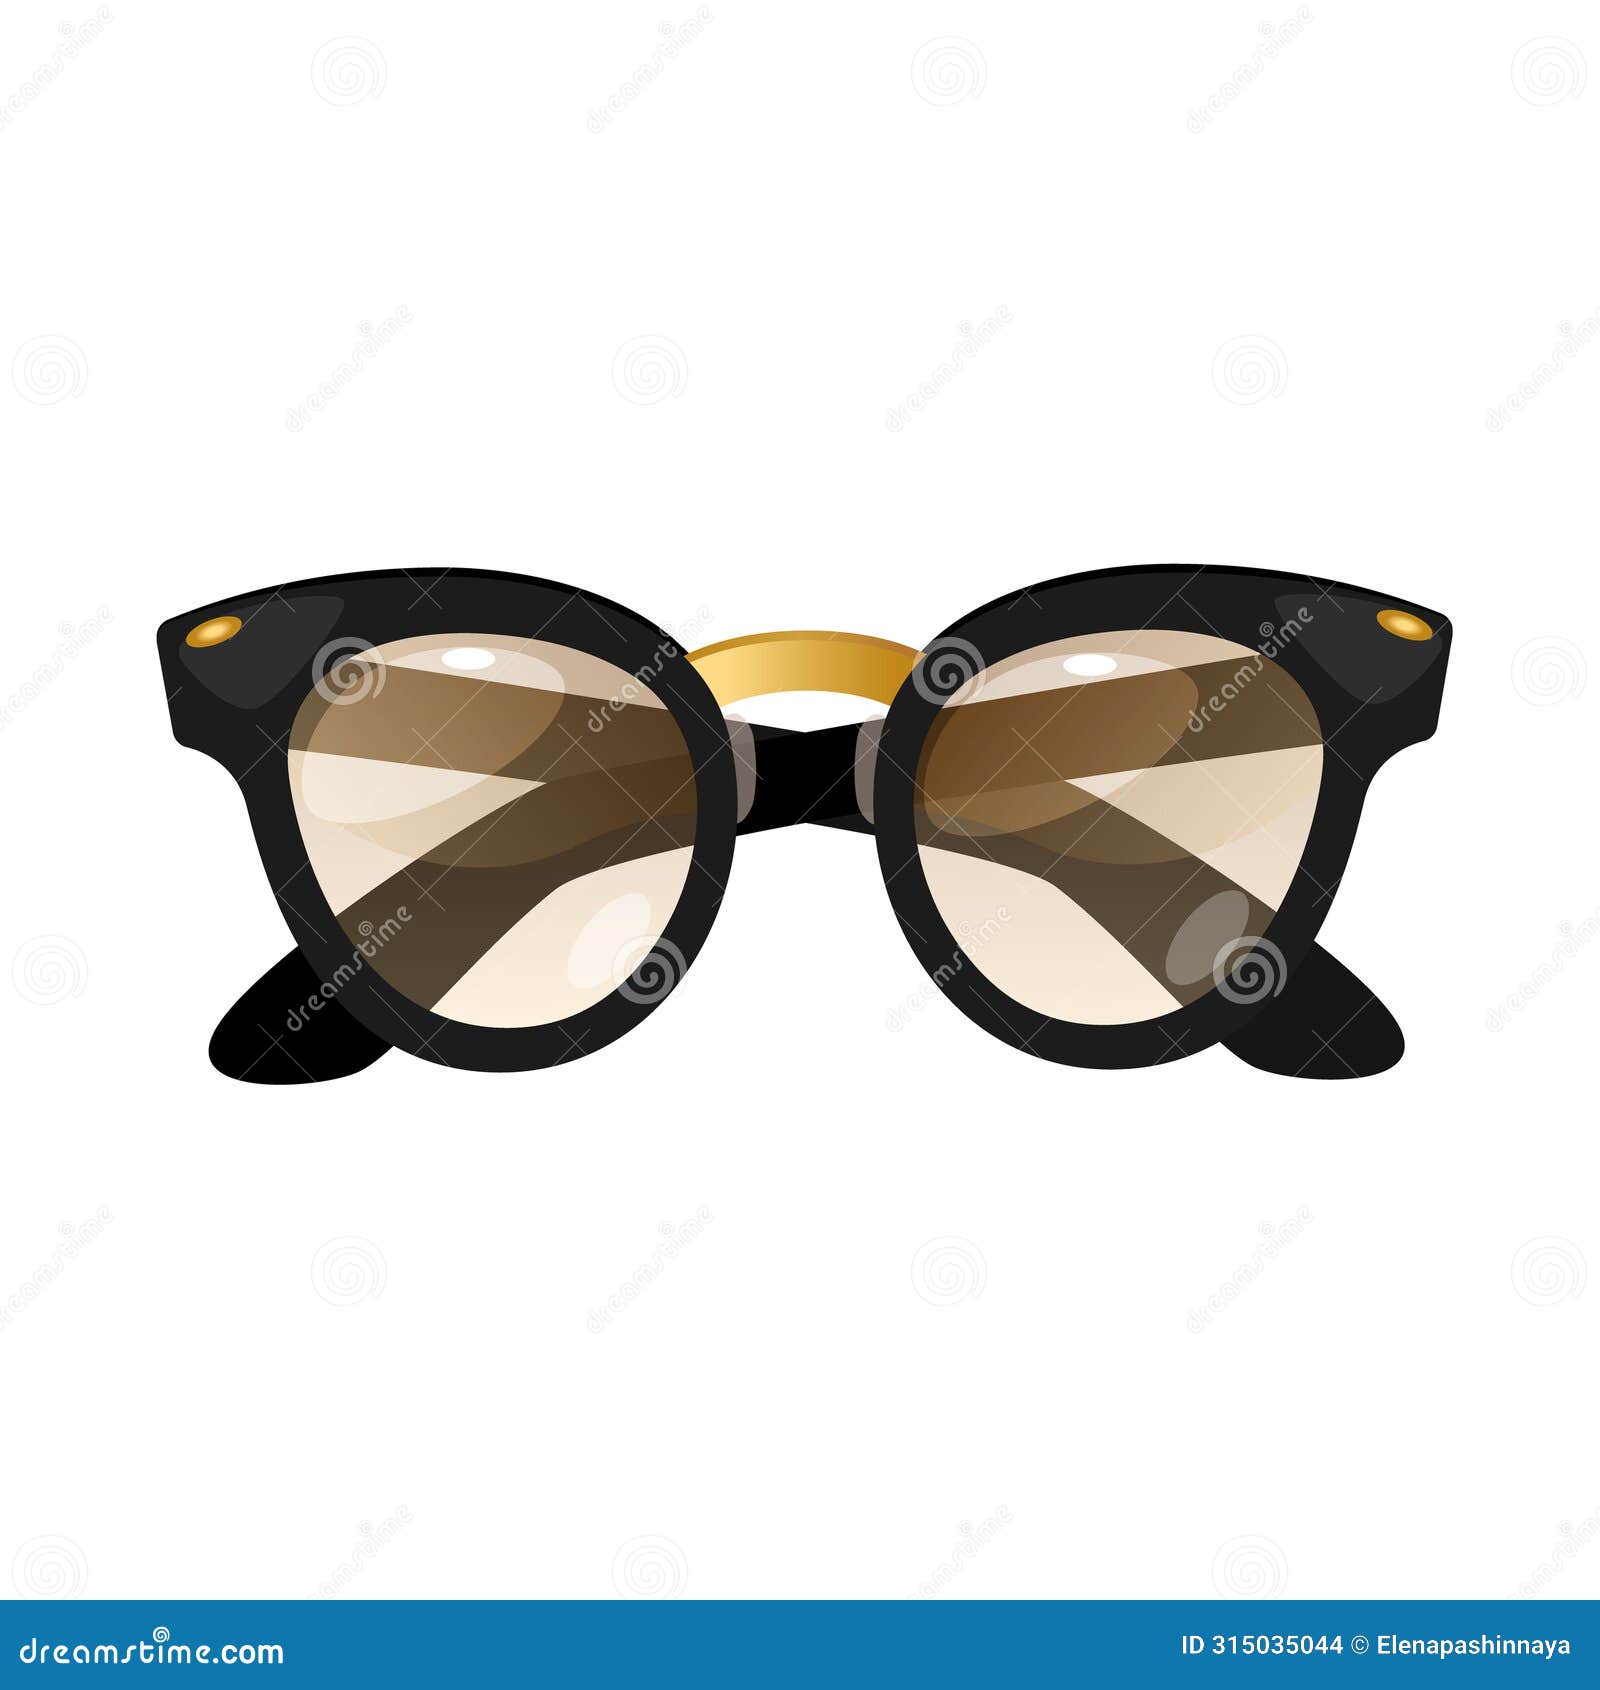 modern fashionable sunglasses  on white background